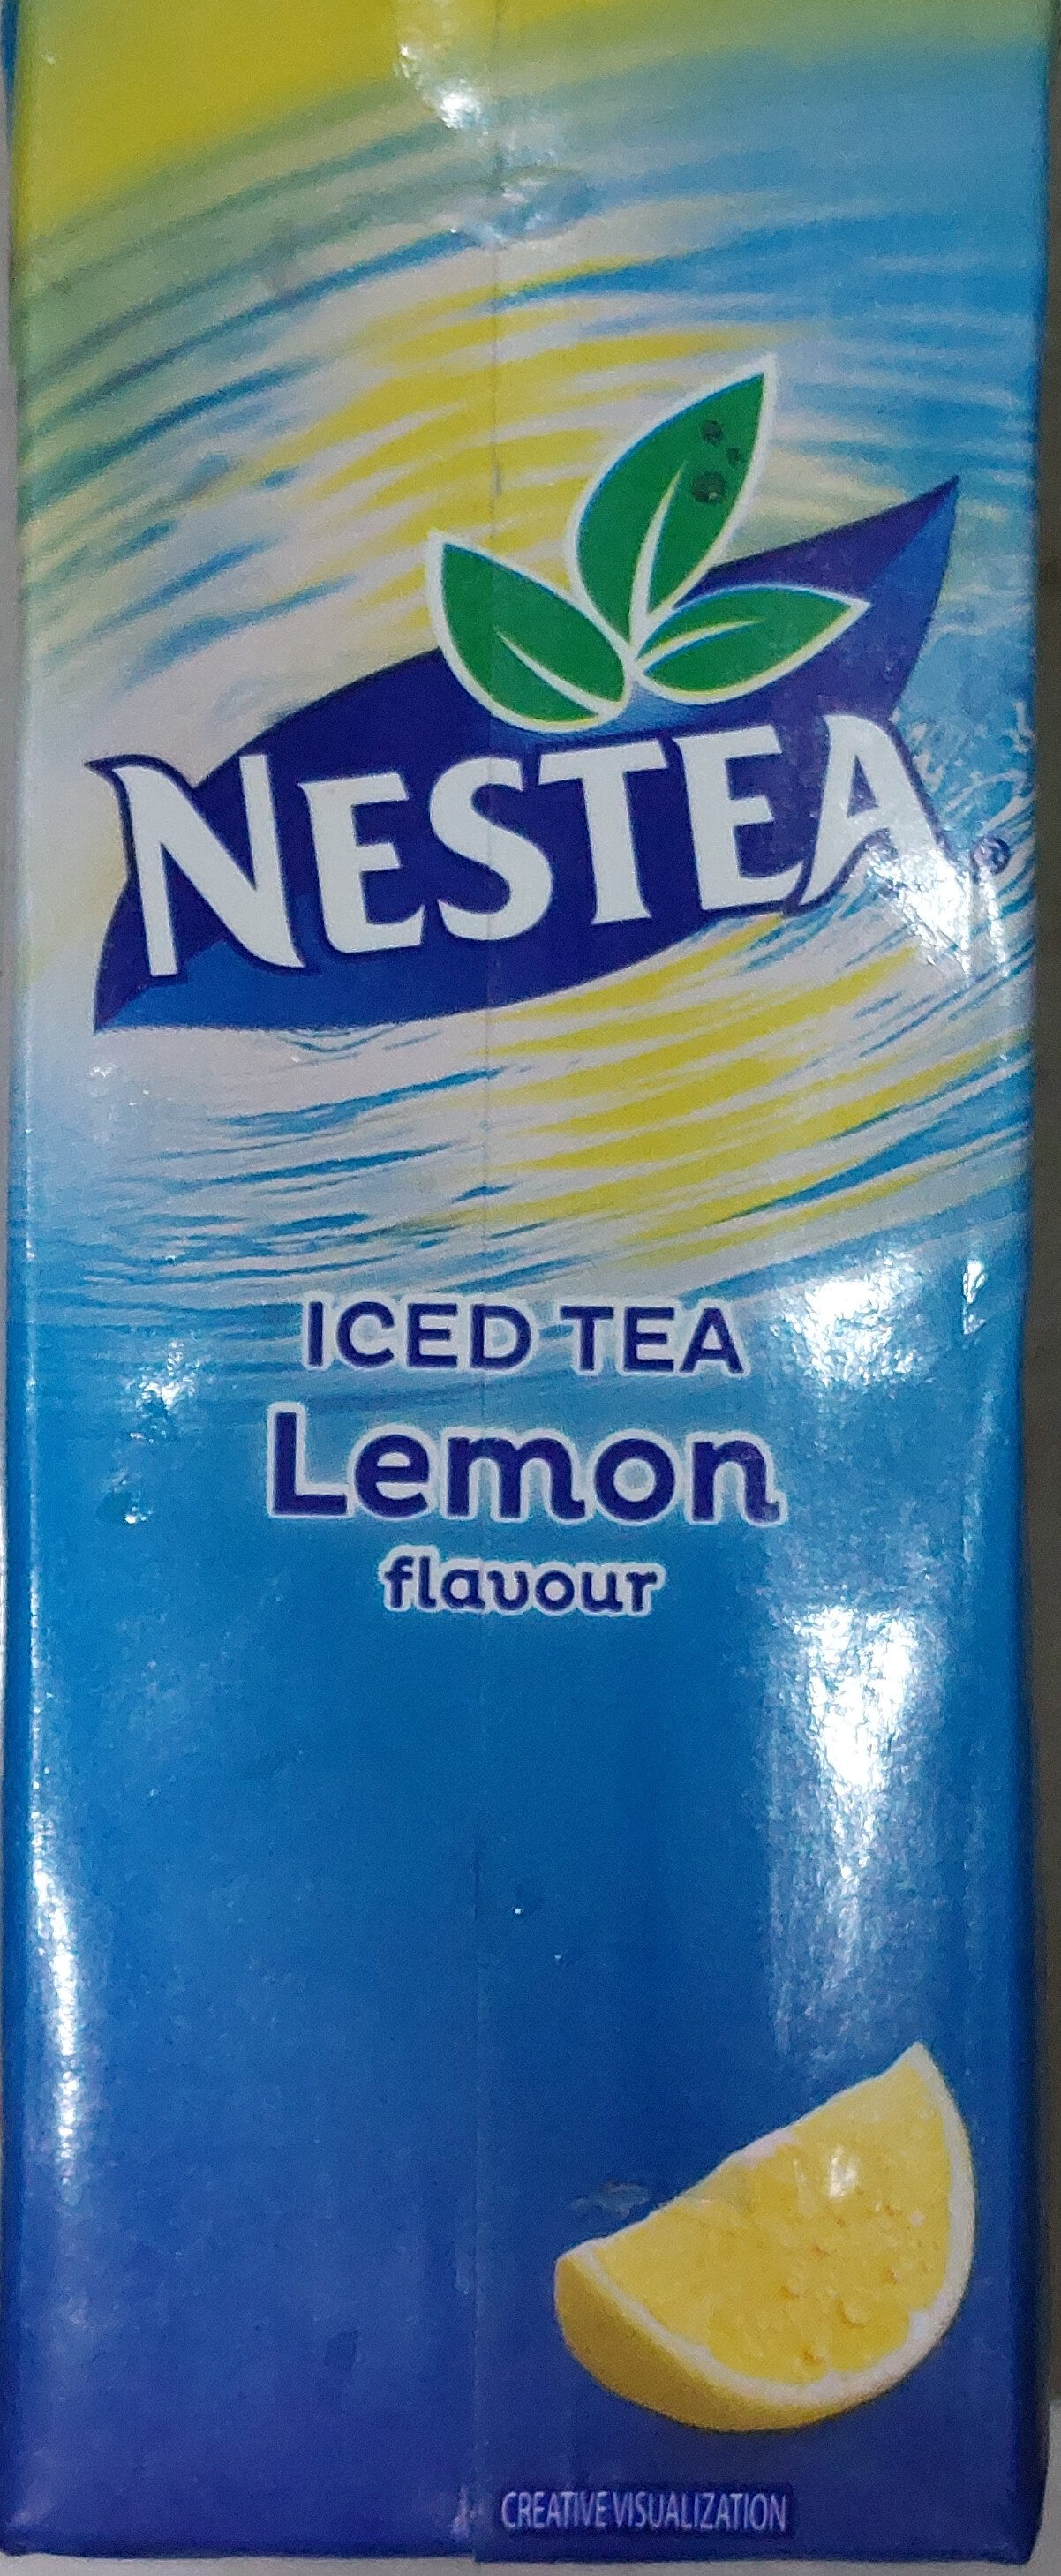 Nestea Iced Tea Lemon flavour - Product